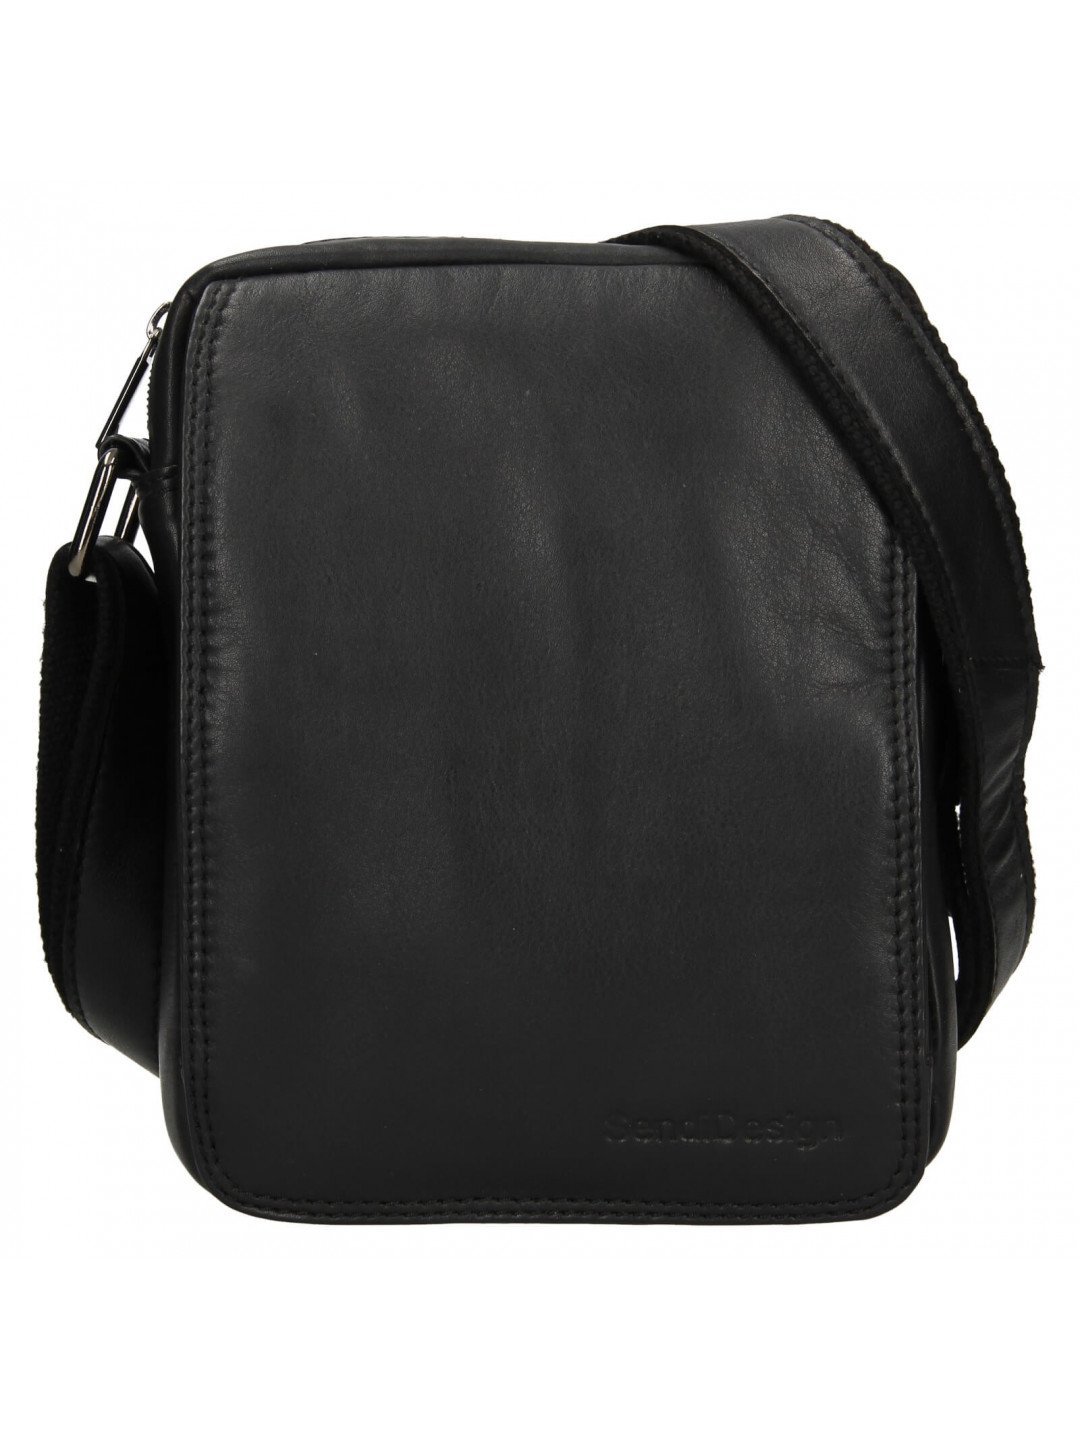 Pánská kožená taška přes rameno SendiDesign Telon – černá